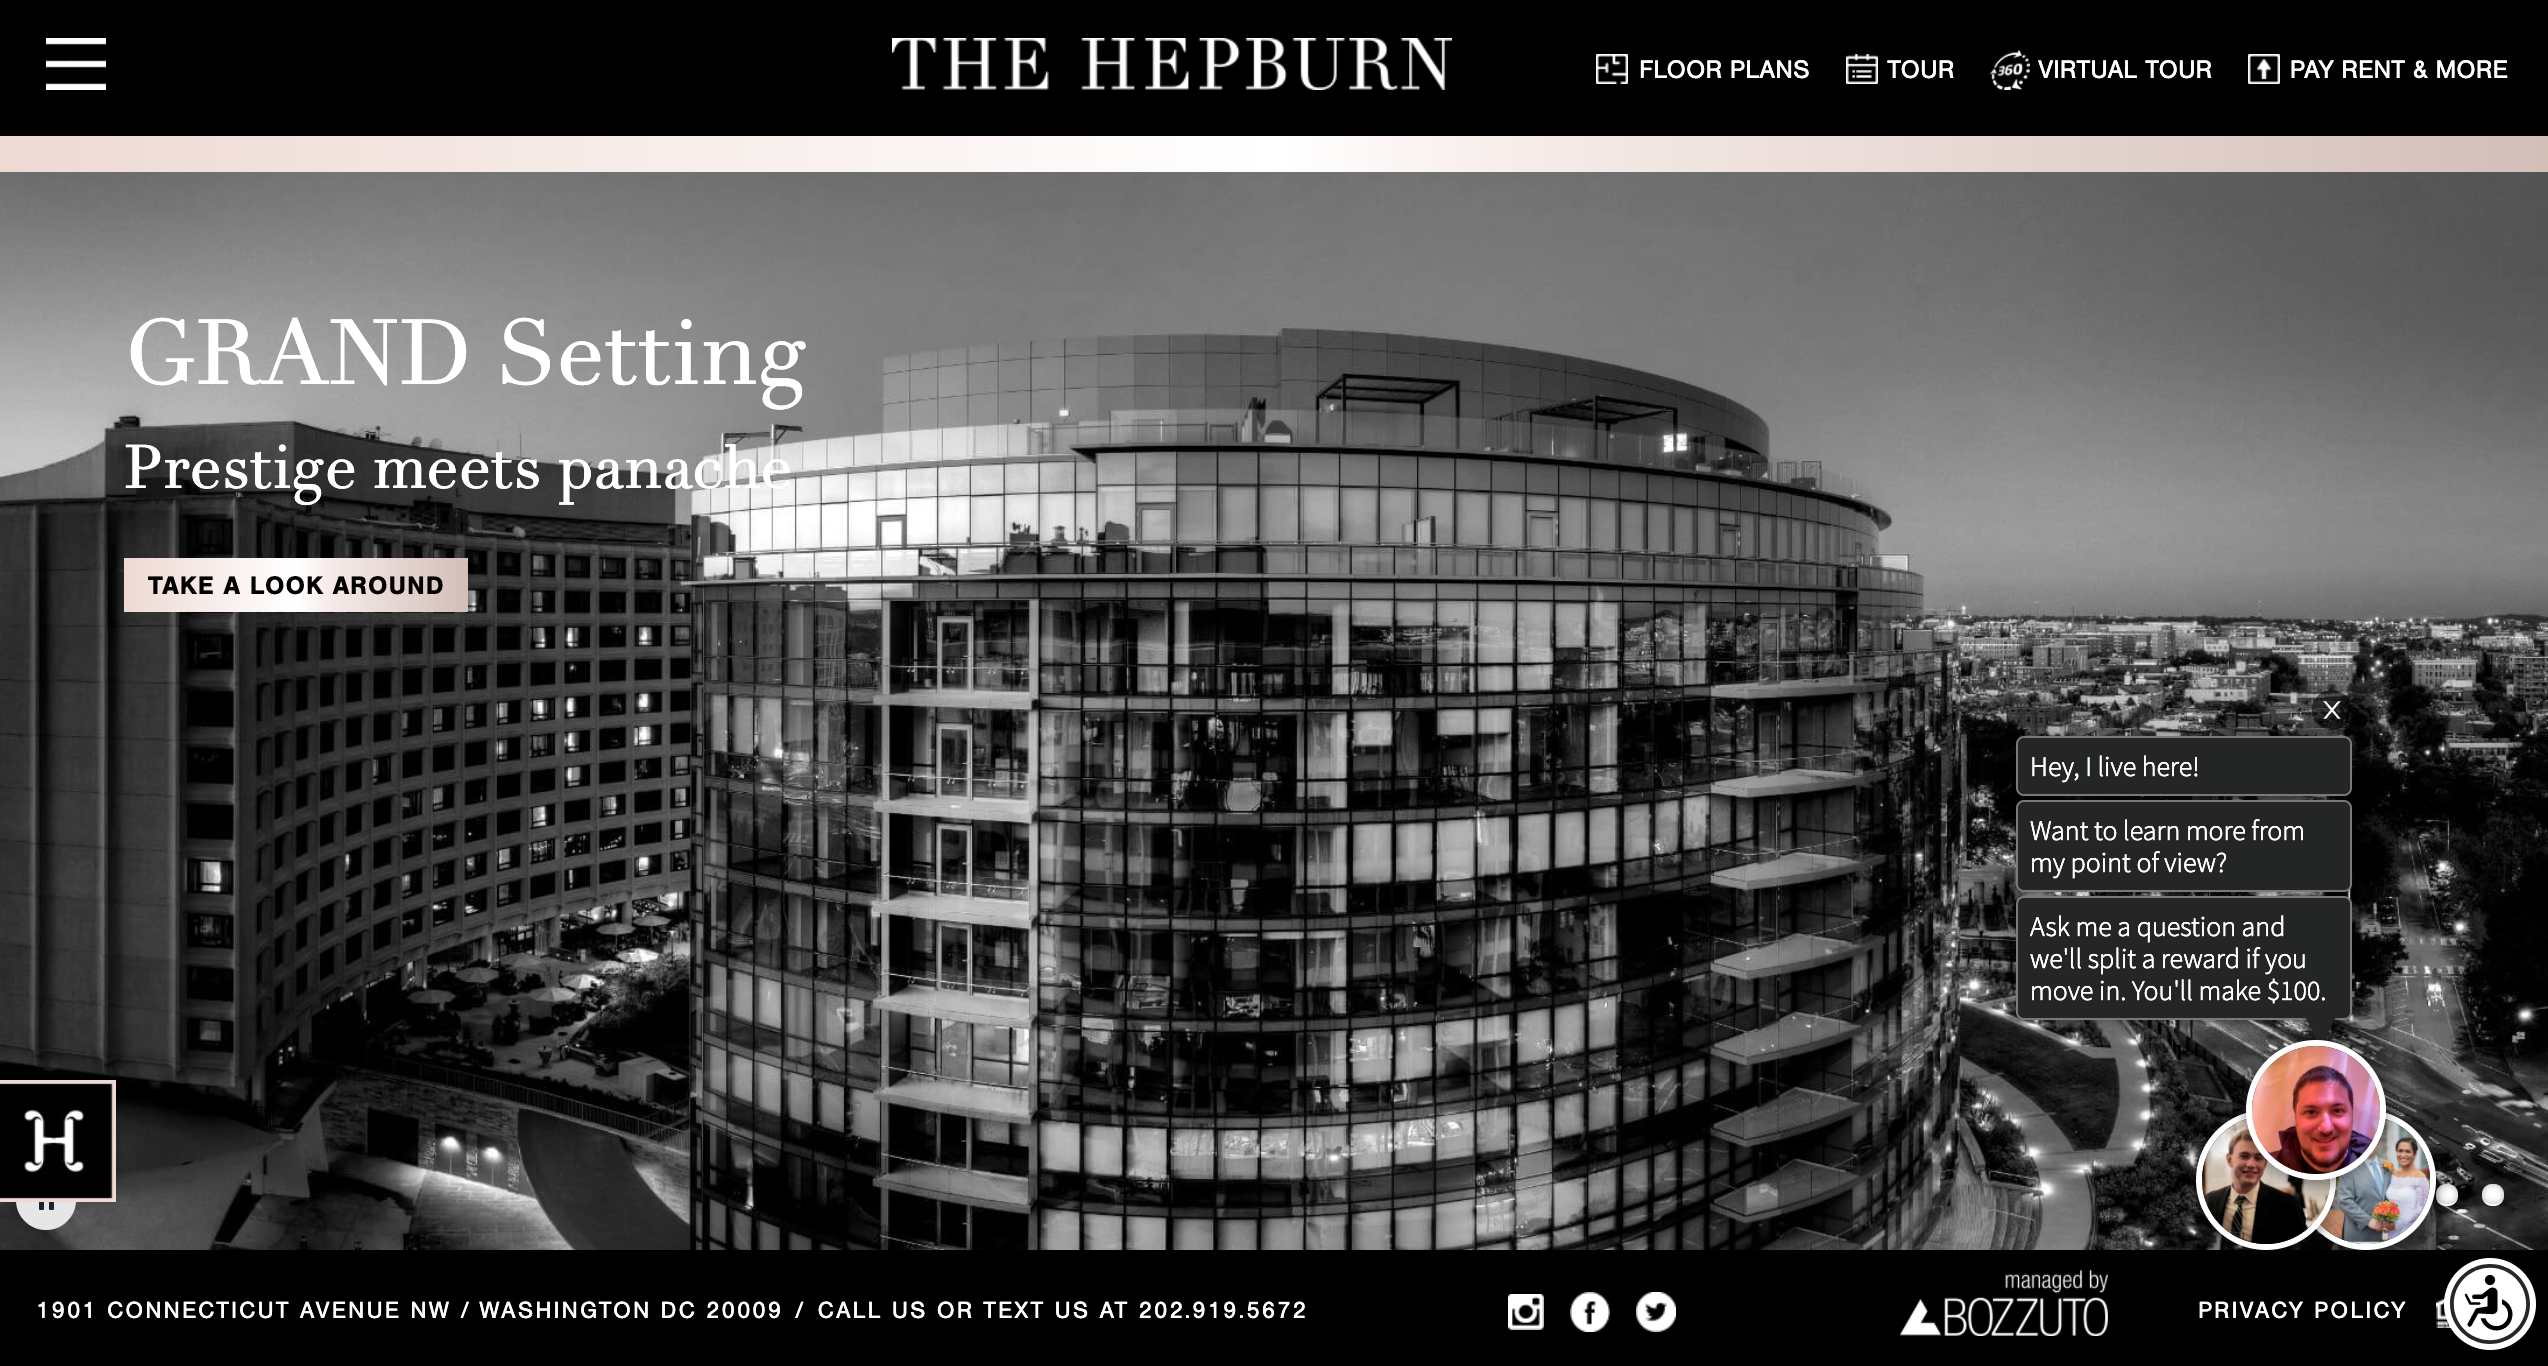 The Hepburn Virtual Tour